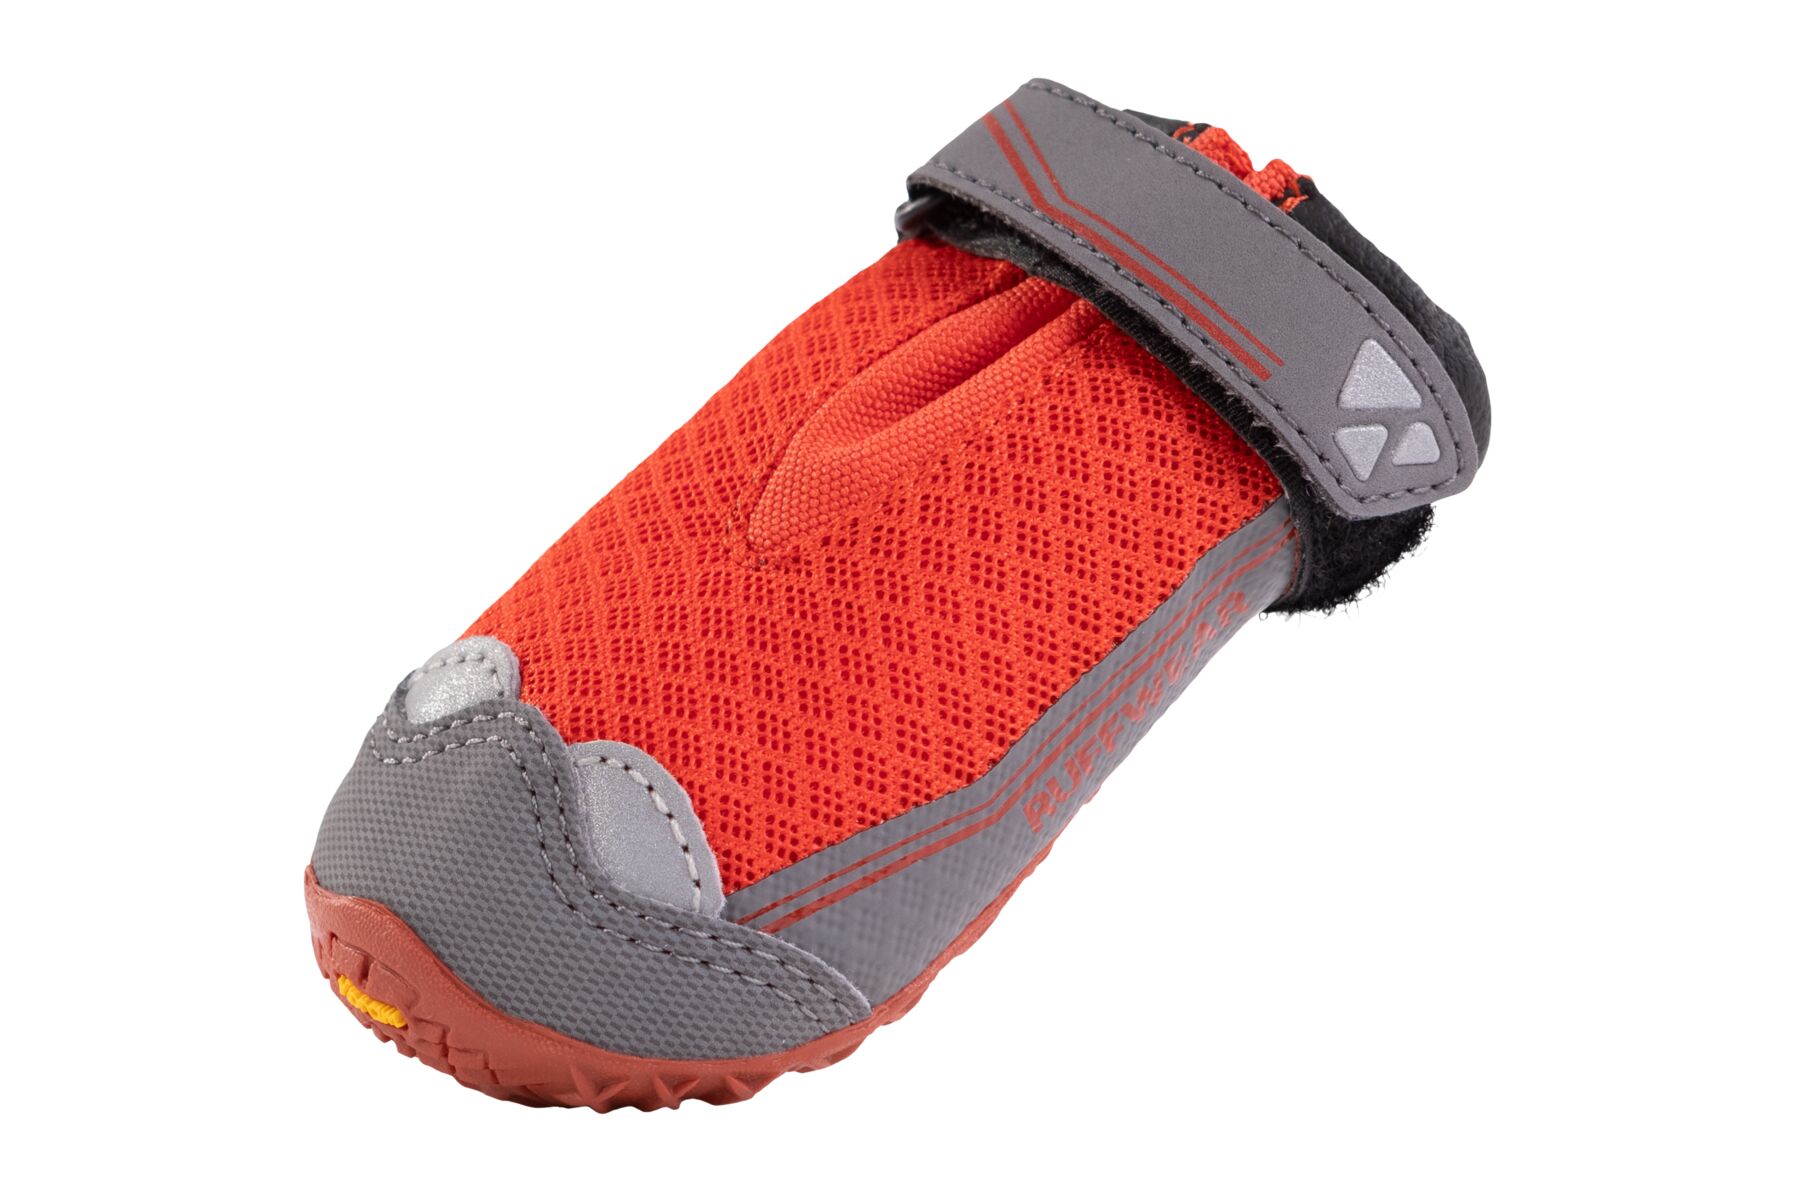 RuffWear Grip Trex™ Boots - set of 2 - Red Sumac